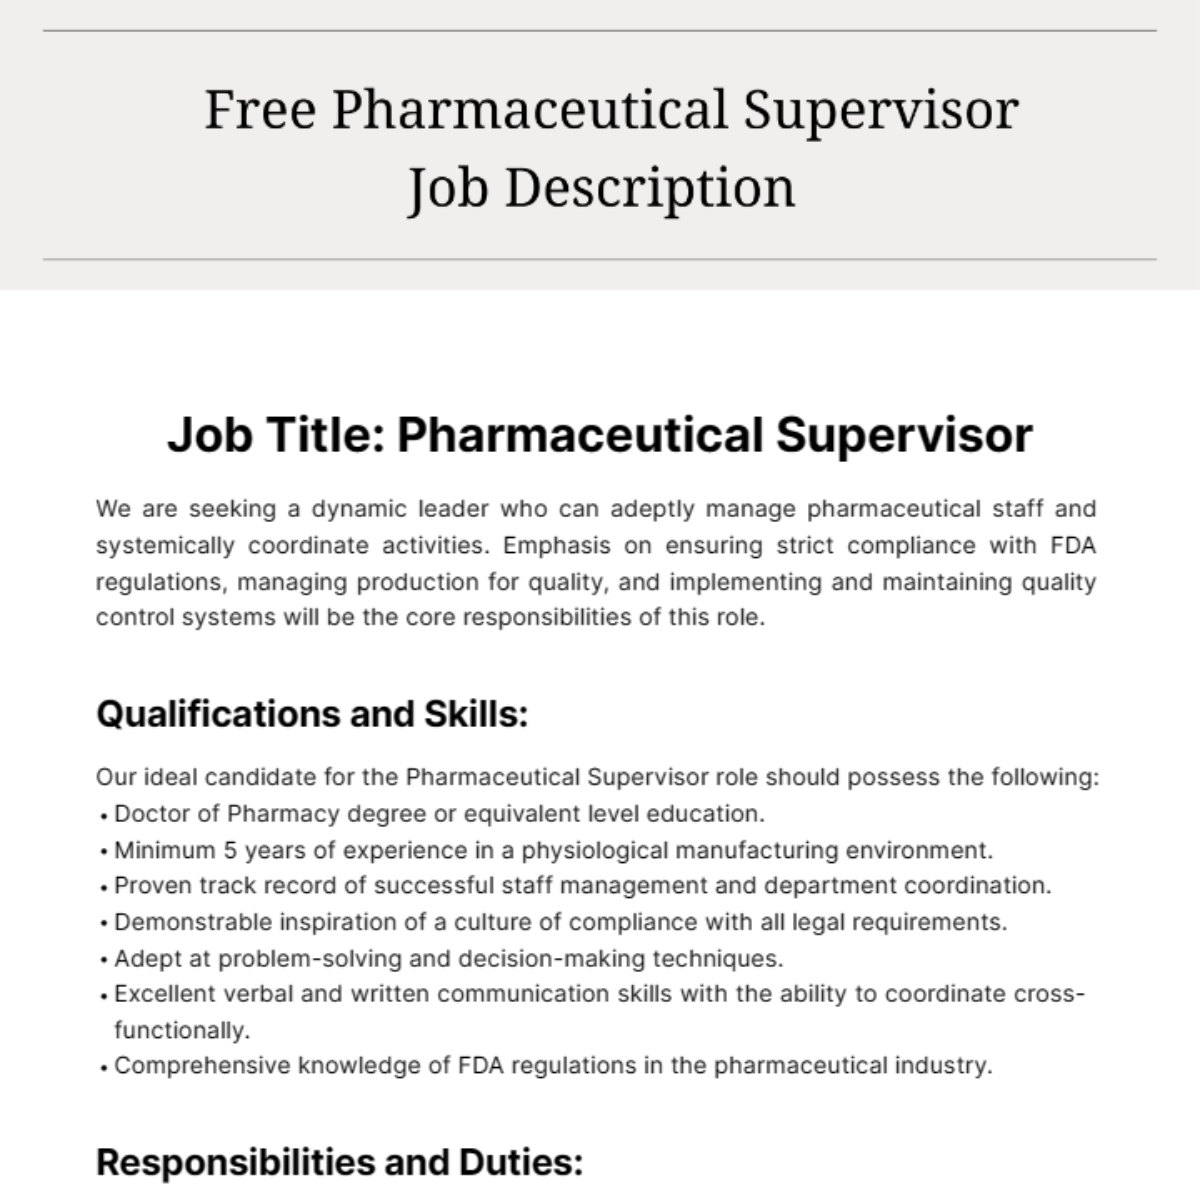 Free Pharmaceutical Supervisor Job Description Template